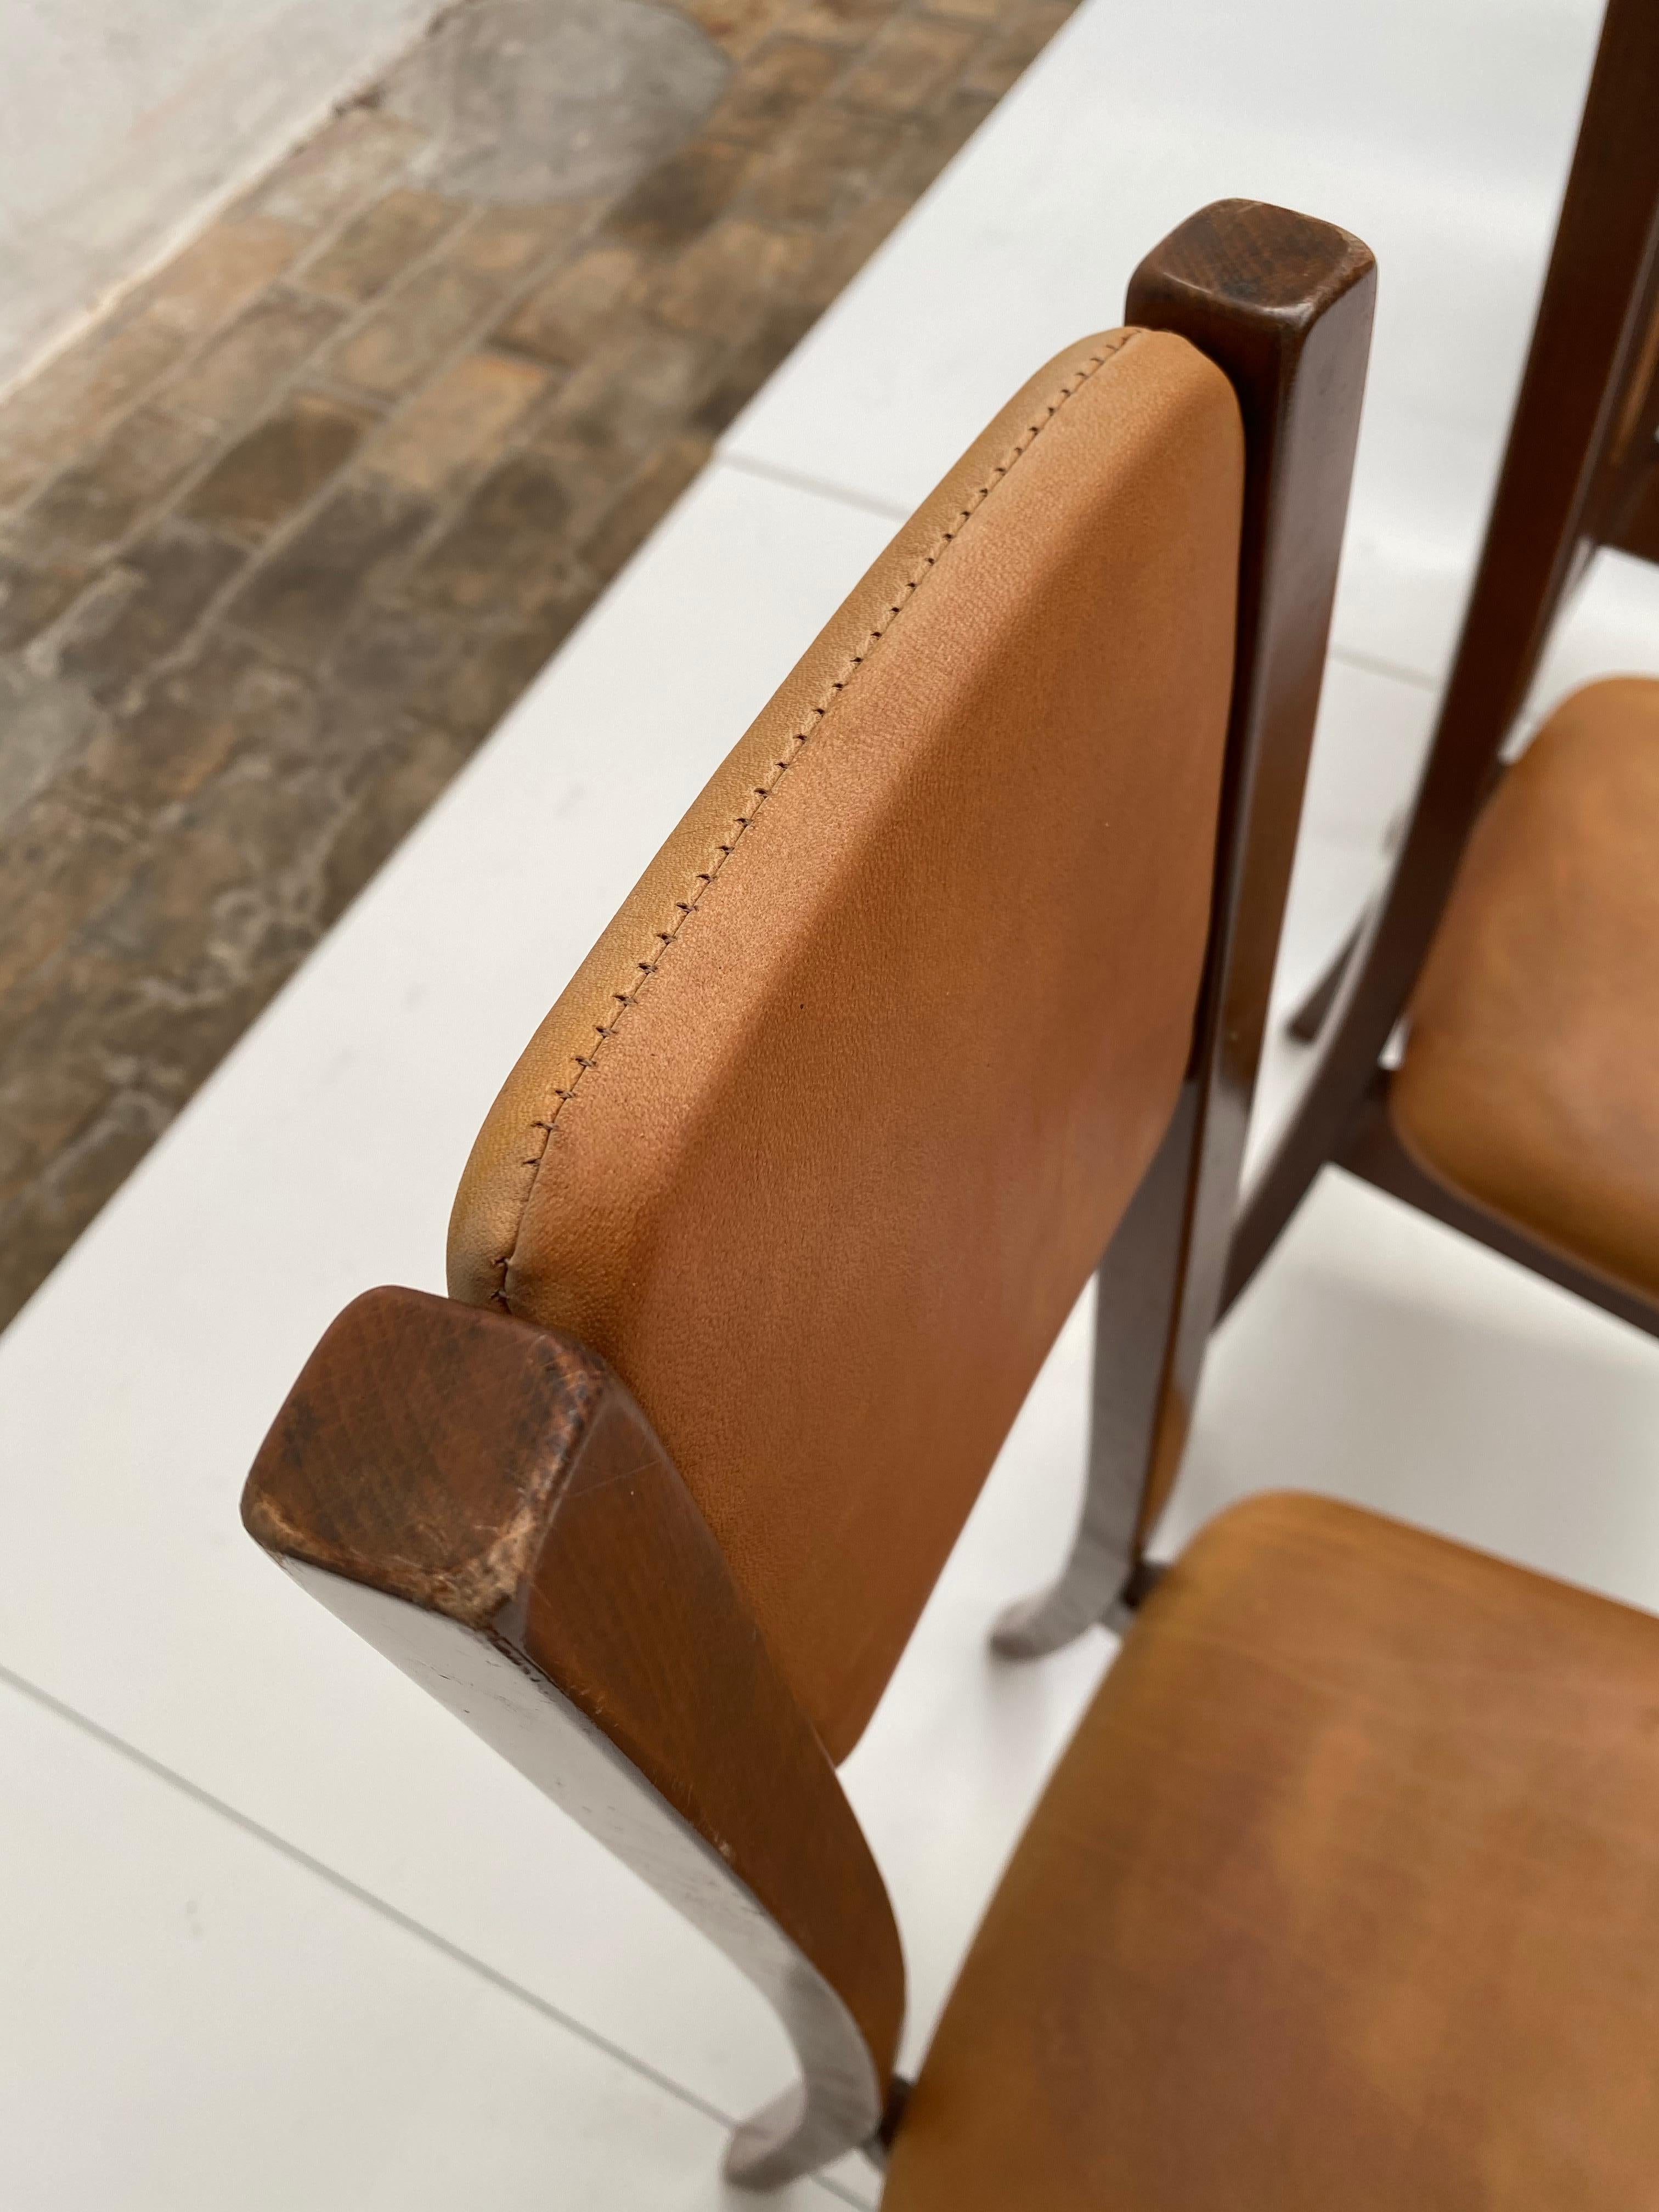 Six walnut  & Leather Mangiarotti 'S11' Dining Chairs, Sorgente Dei Mobili 1972 For Sale 6